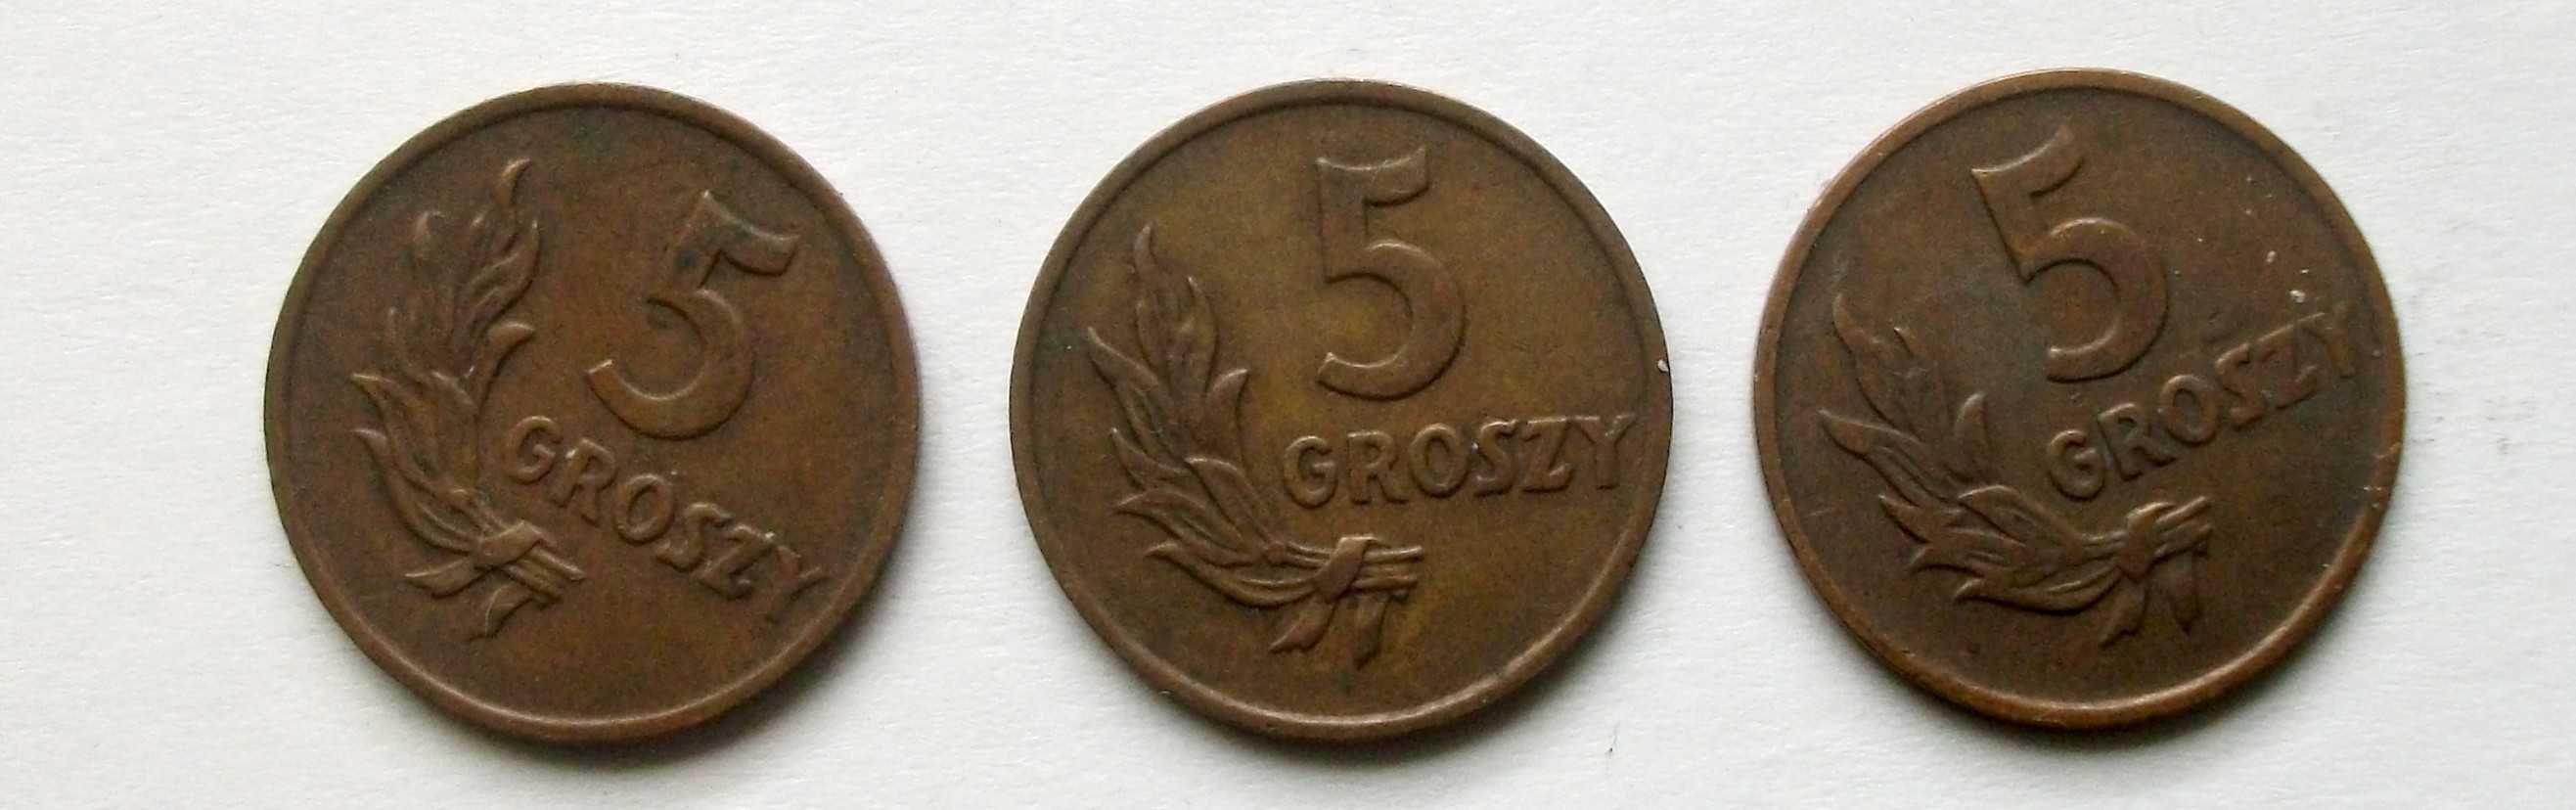 5 groszy 1949 brąz Ładne 3 sztuki